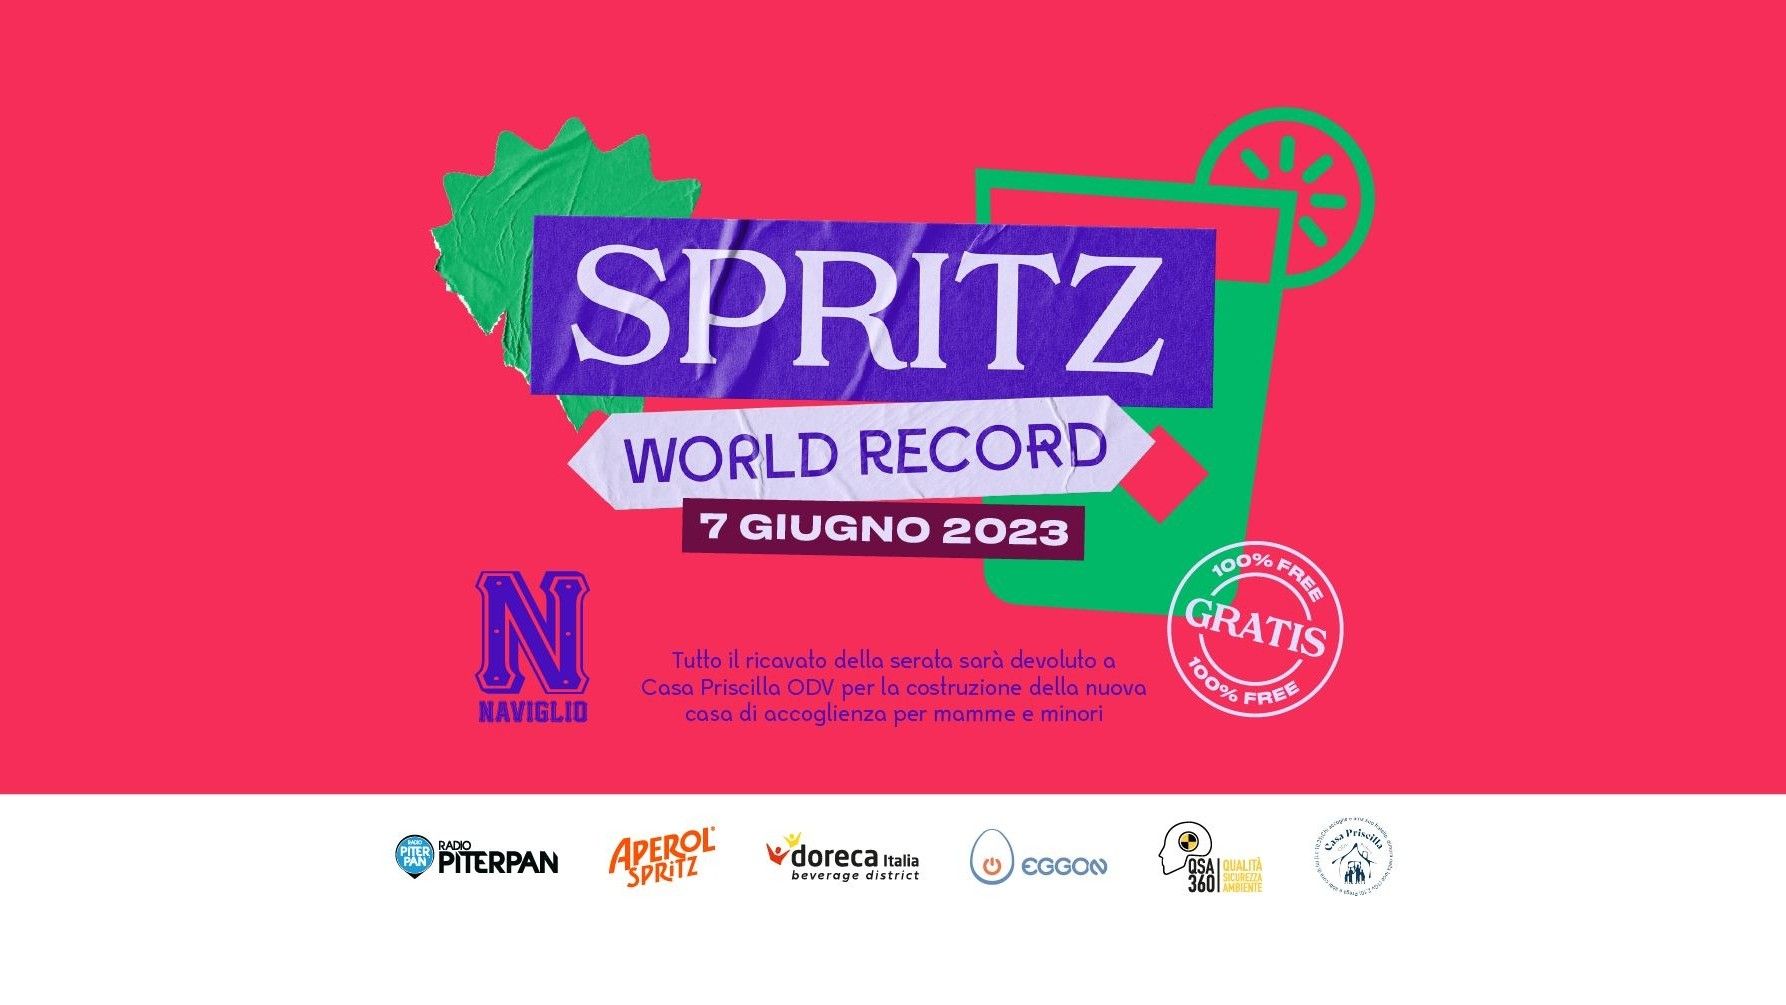 Spritz World Record